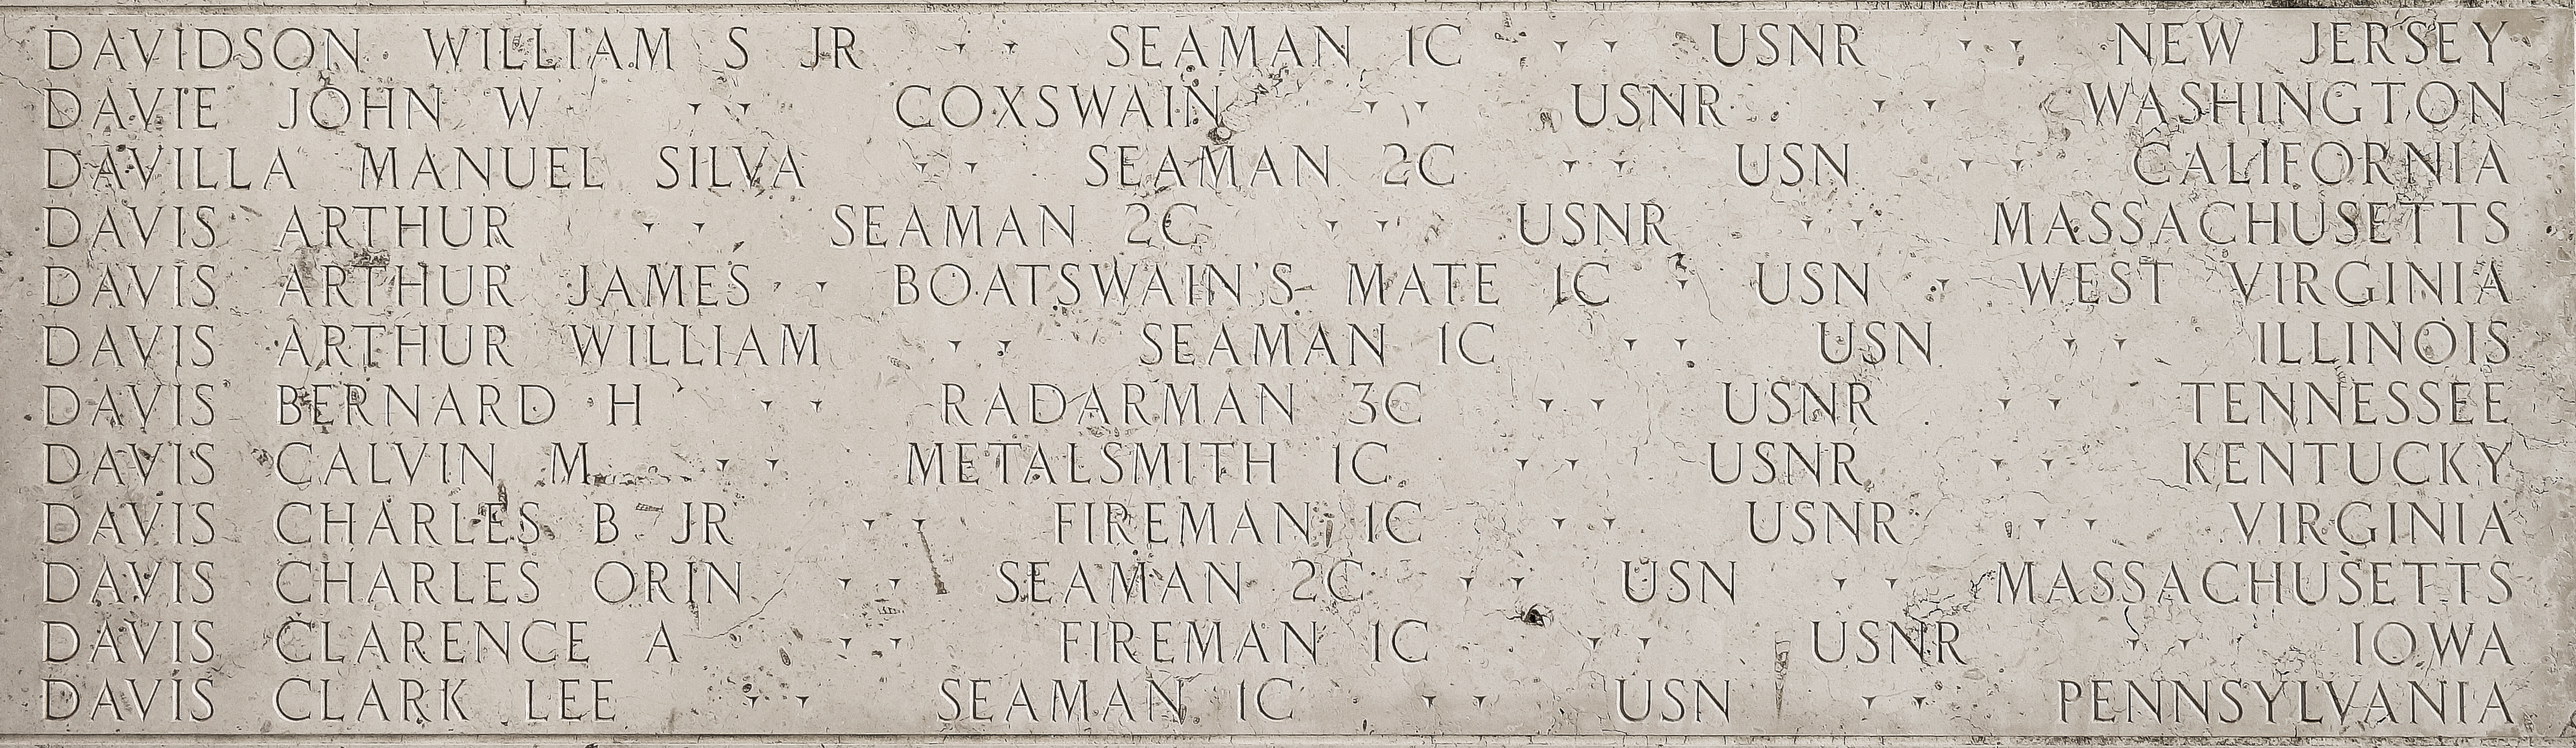 Arthur William Davis, Seaman First Class